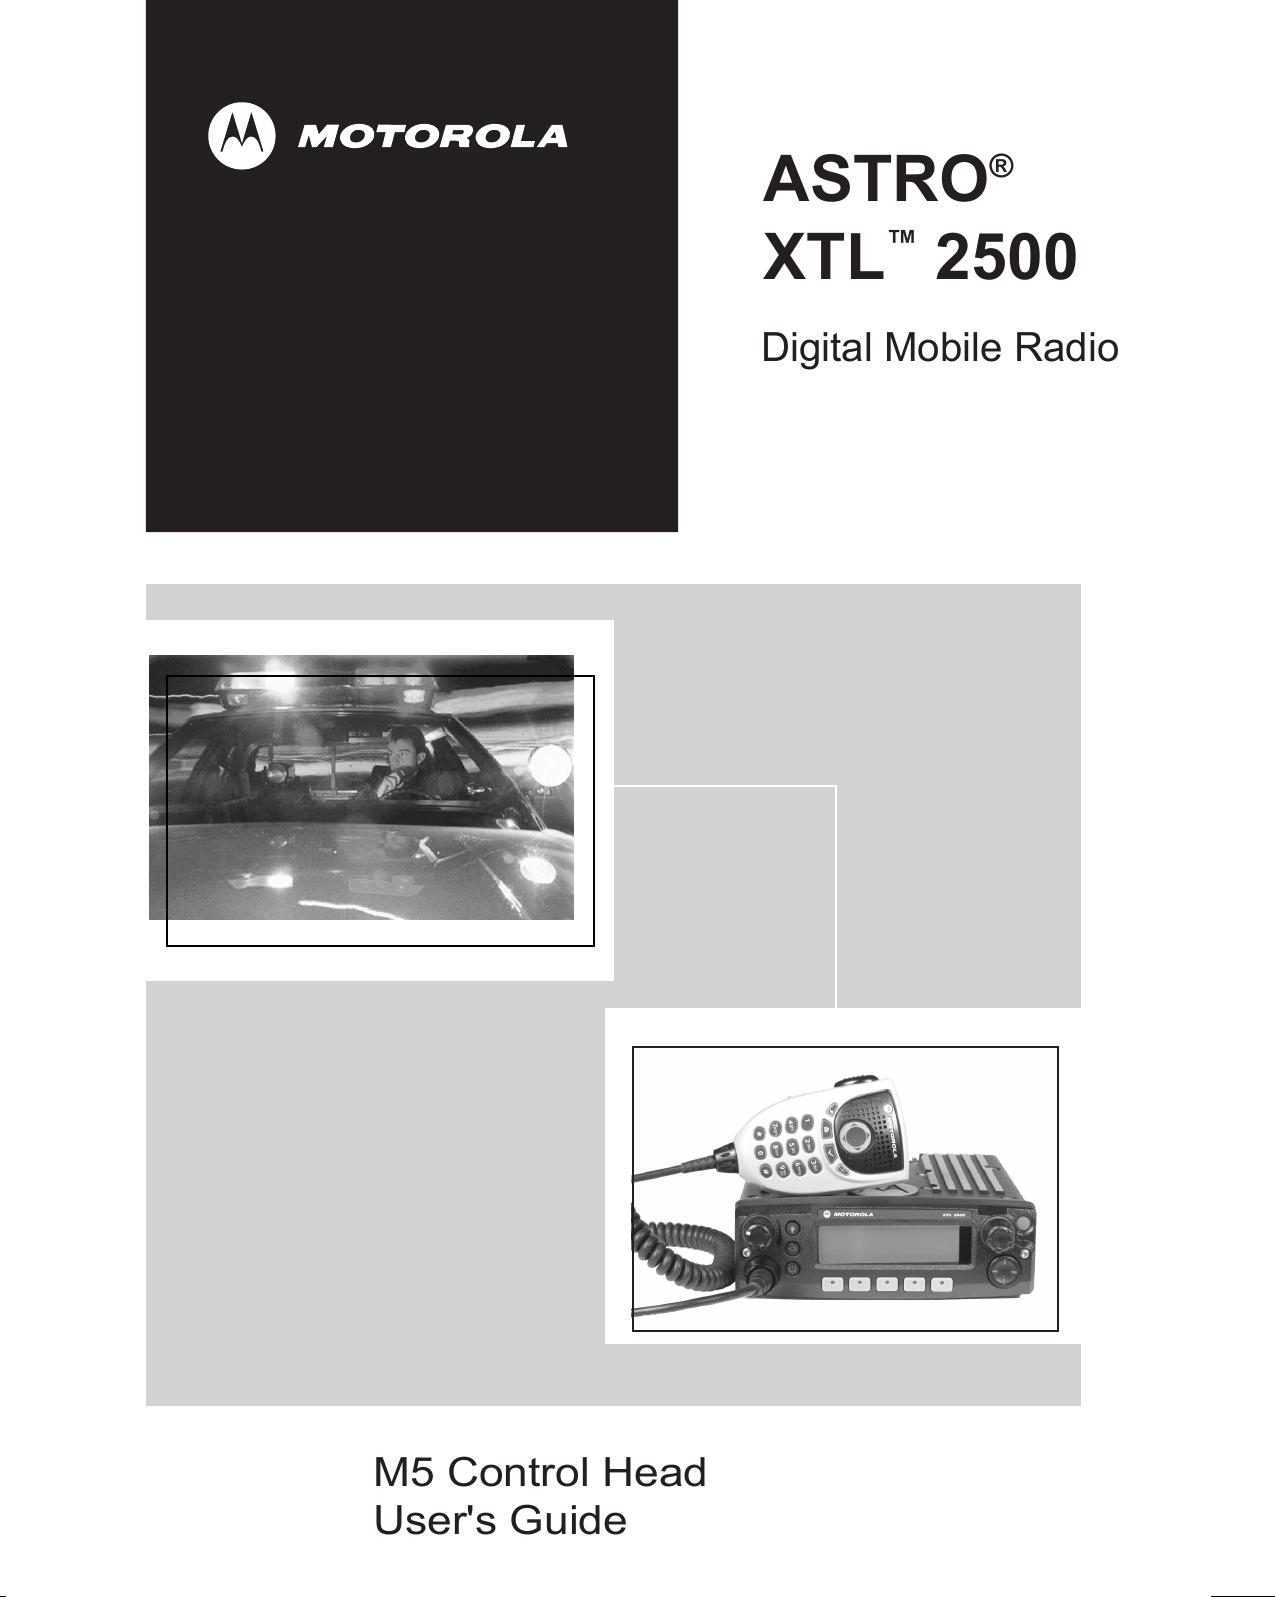 Motorola Astro Xts 2500 Users Manual ManualsLib Makes It Easy To Find